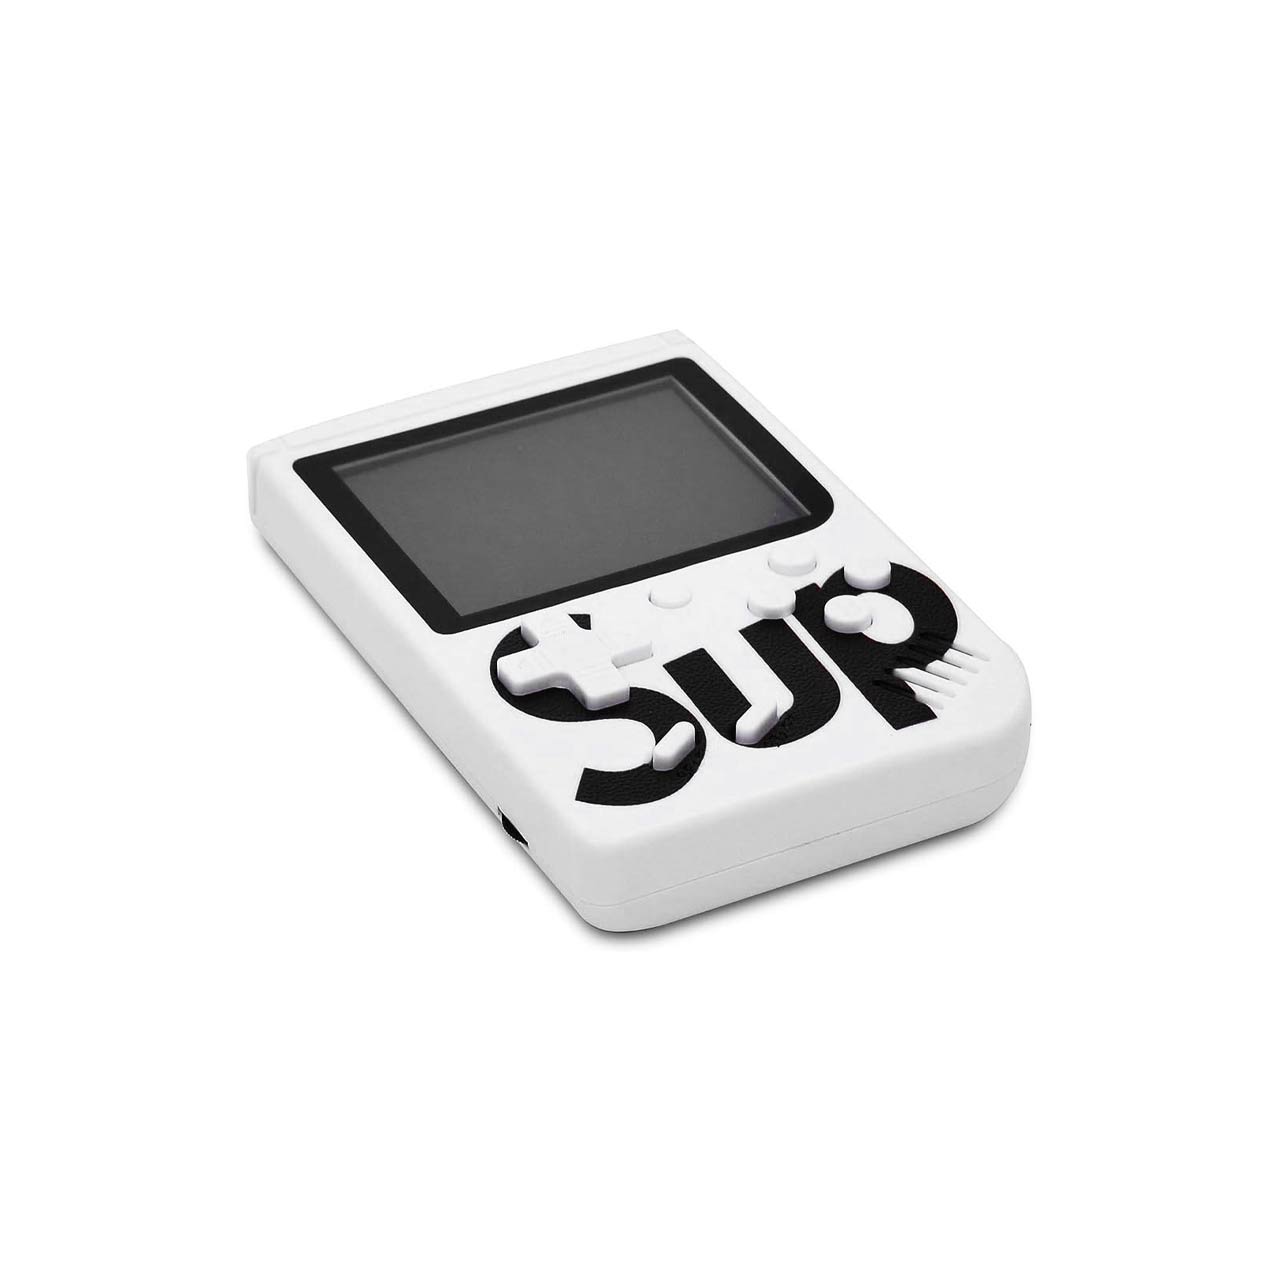 کنسول بازی قابل حمل Sup Game Box مدل Plus - سفید - DST (گارانتی شش ماهه)